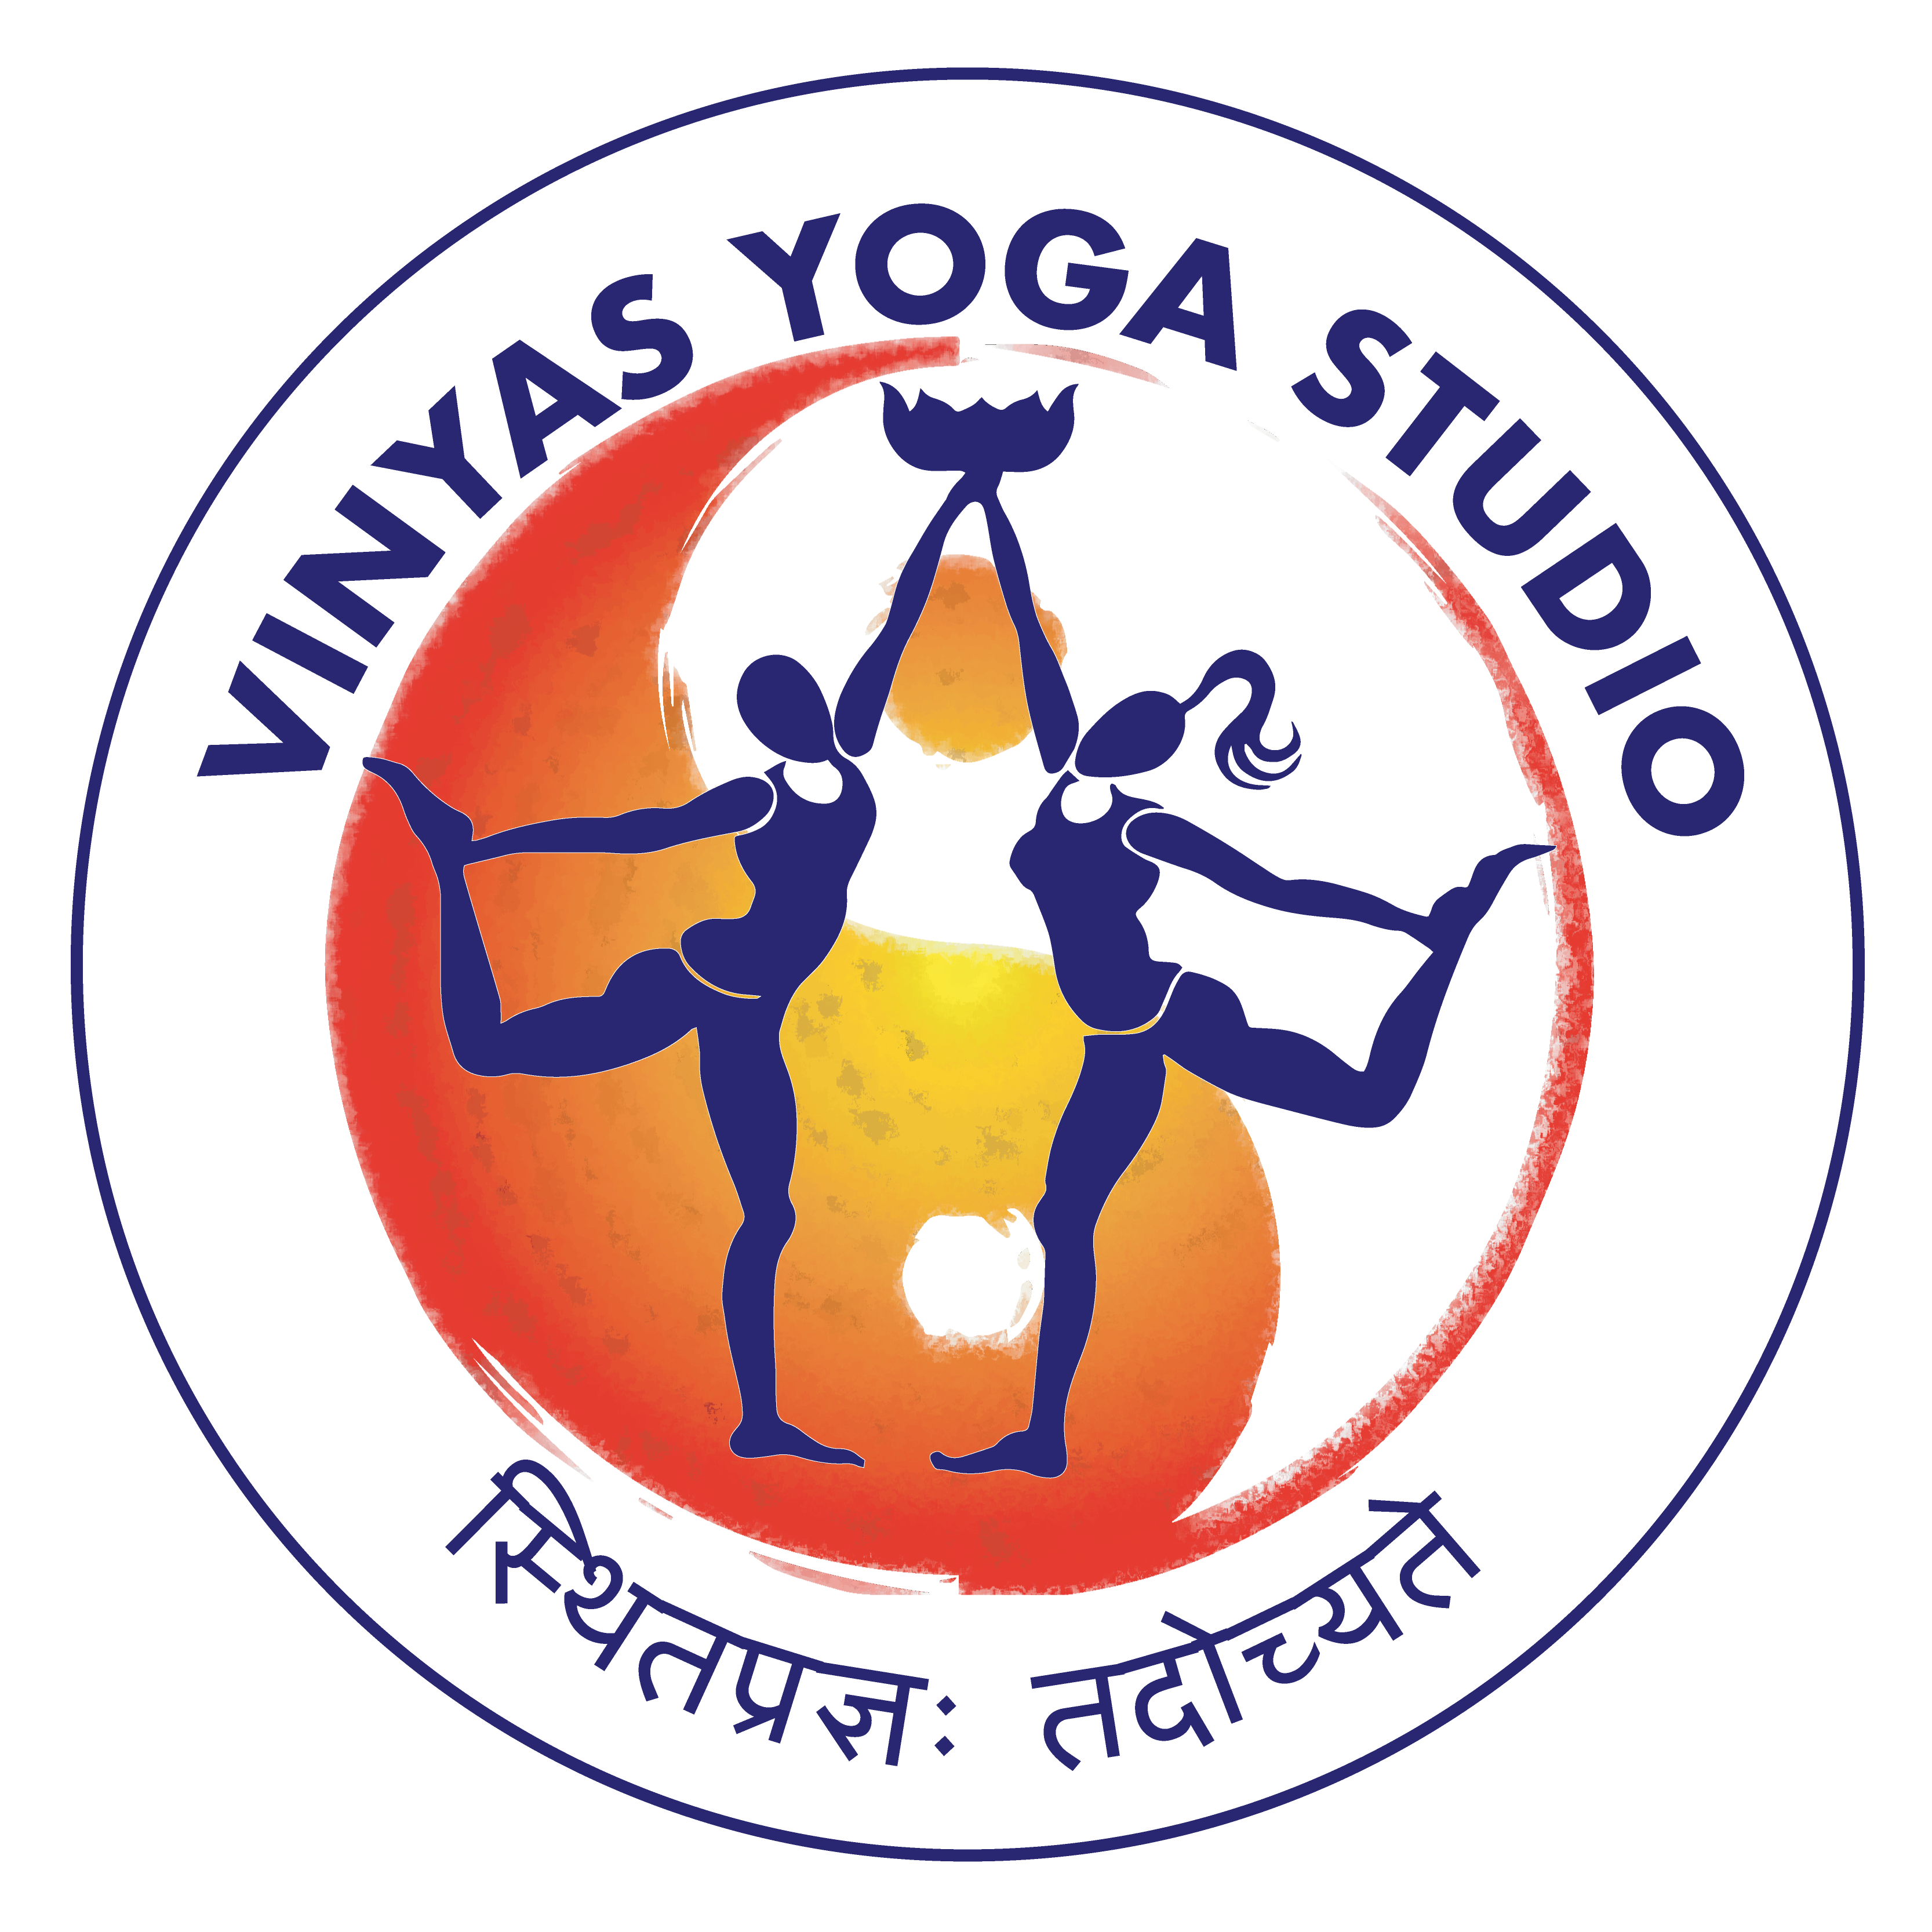 Vinyas Yoga Studio